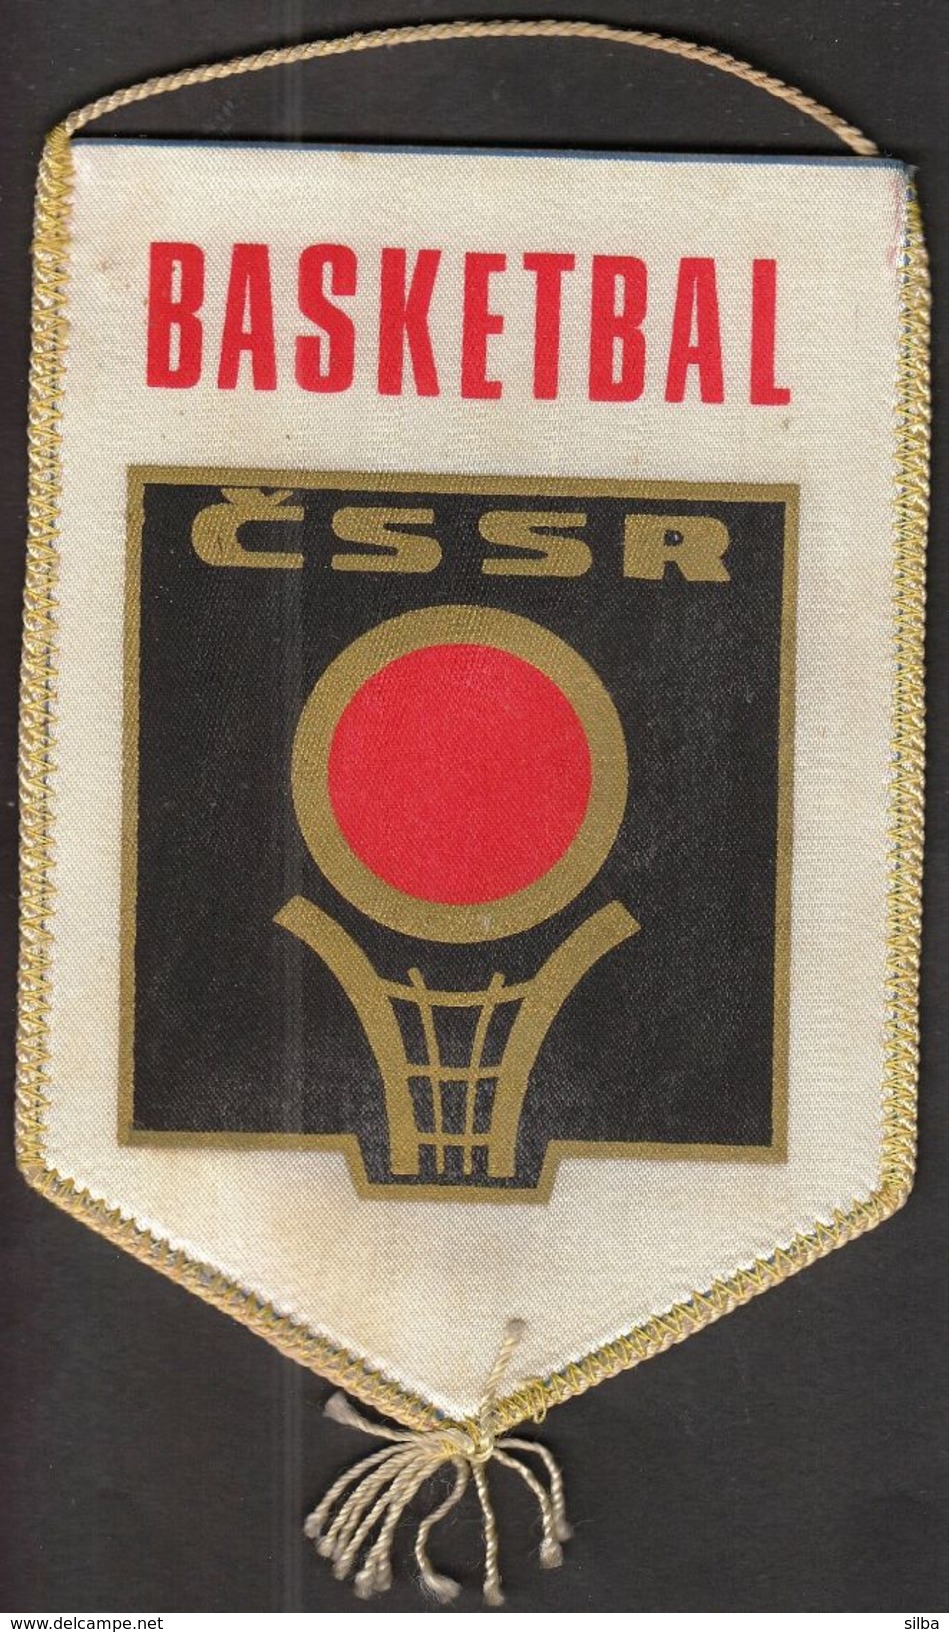 Basketball / Flag, Pennant / Czechoslovakia / Czechoslovak Basketball Federation - Apparel, Souvenirs & Other